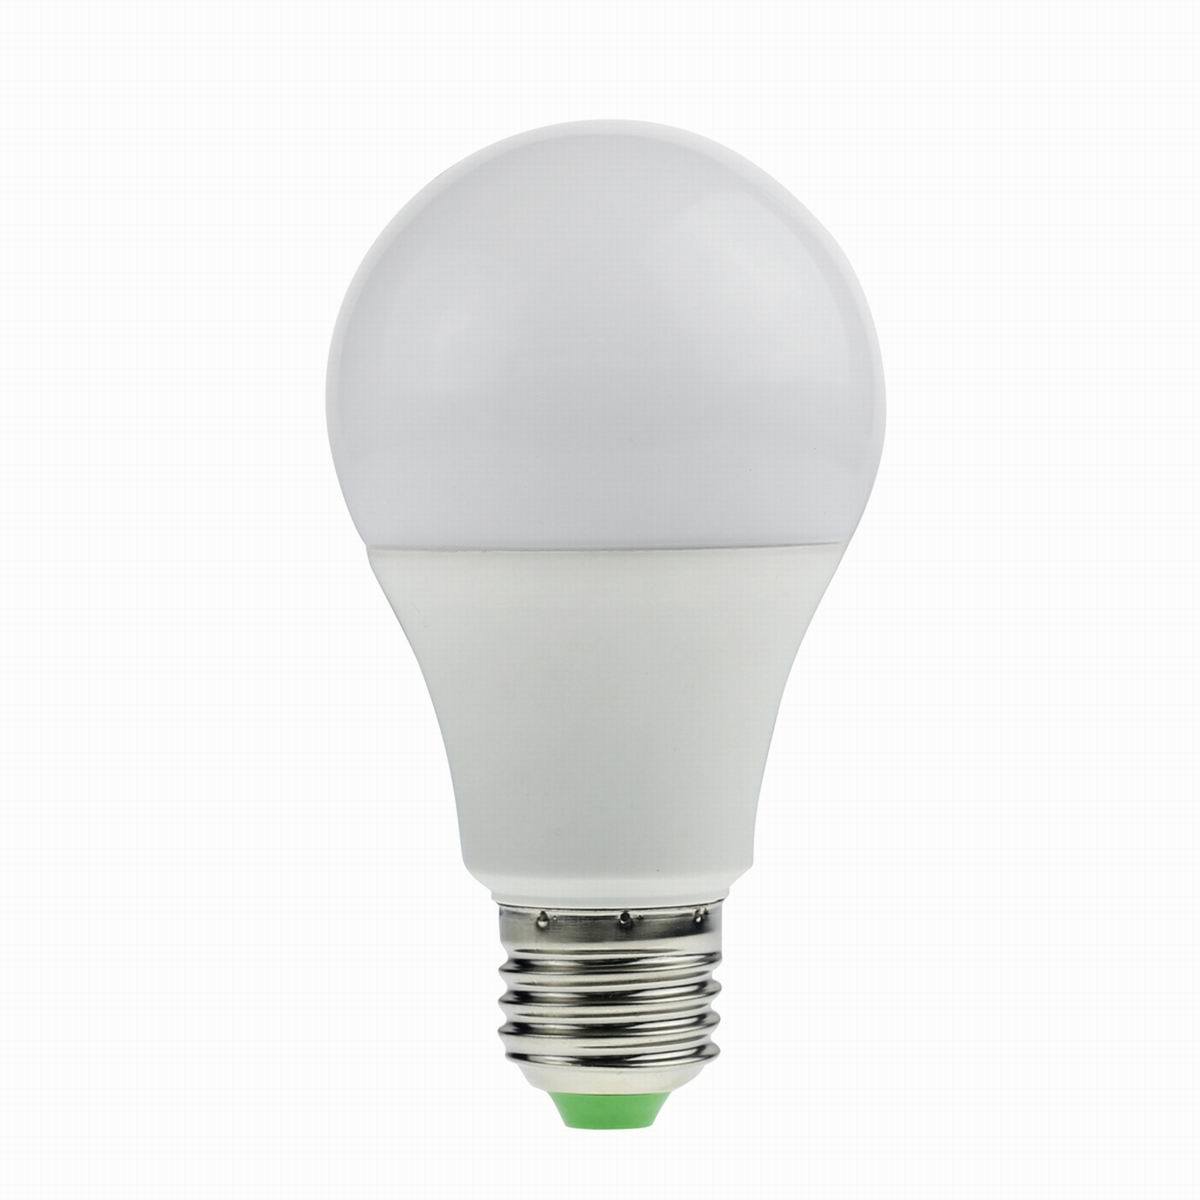 Quality 9W LED Bulb Light with Economical Design